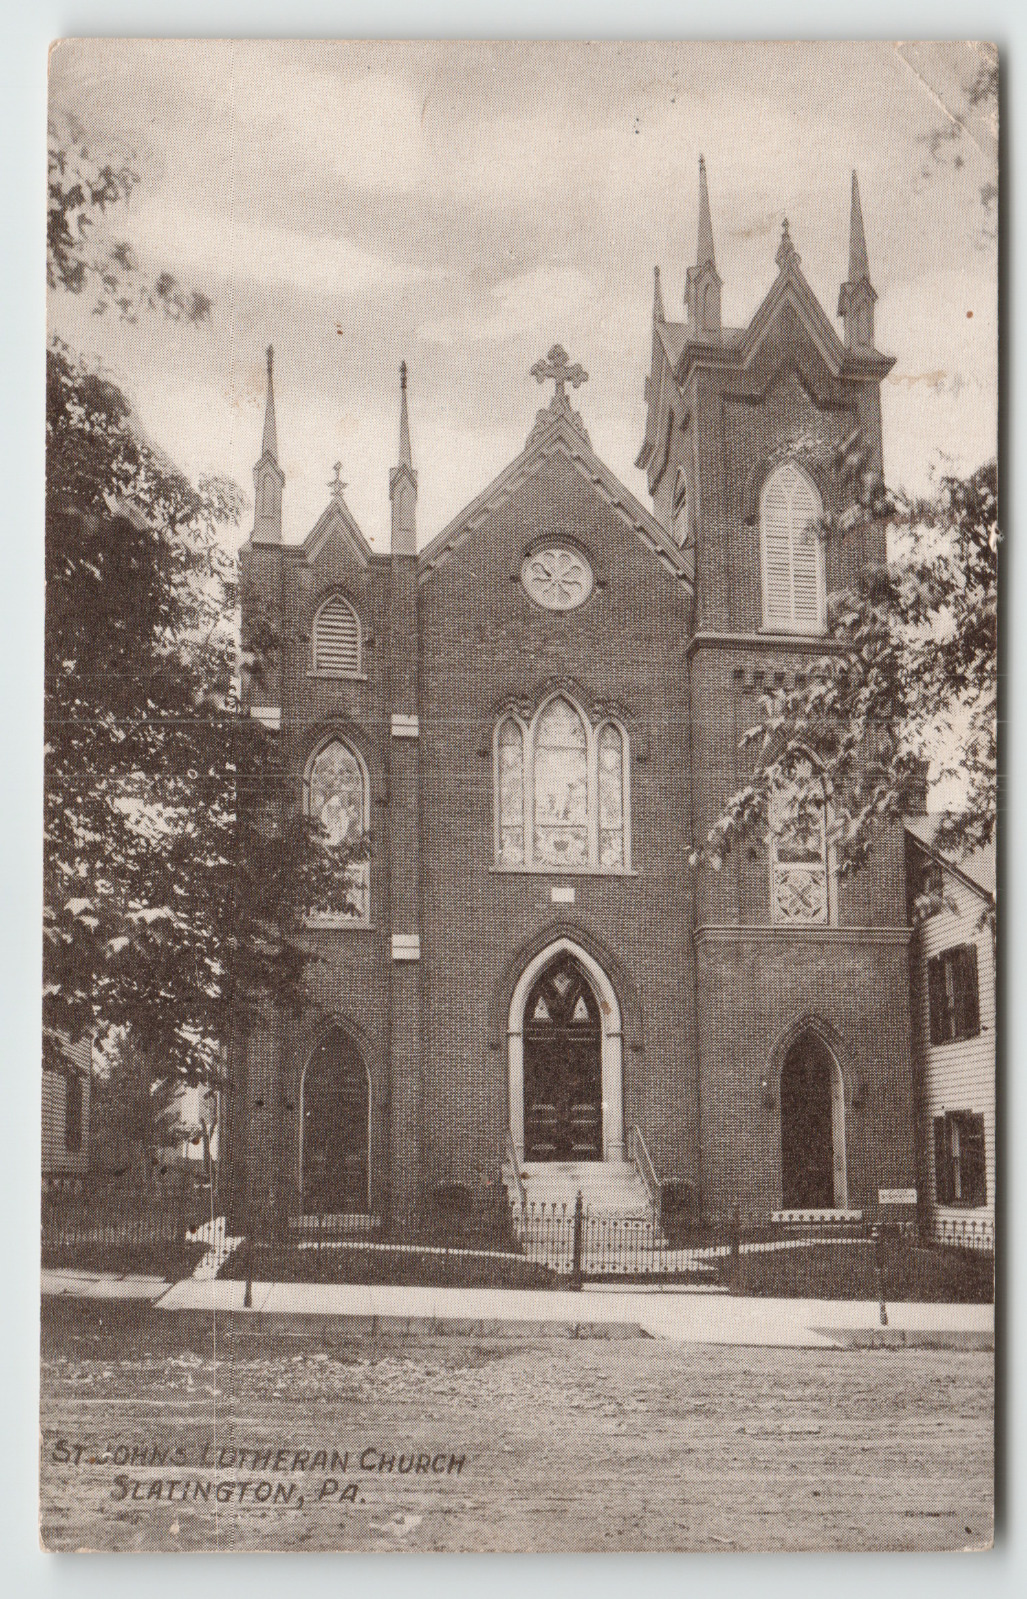 Postcard Vintage 1910 St. John's Lutheran Church Slatington , PA